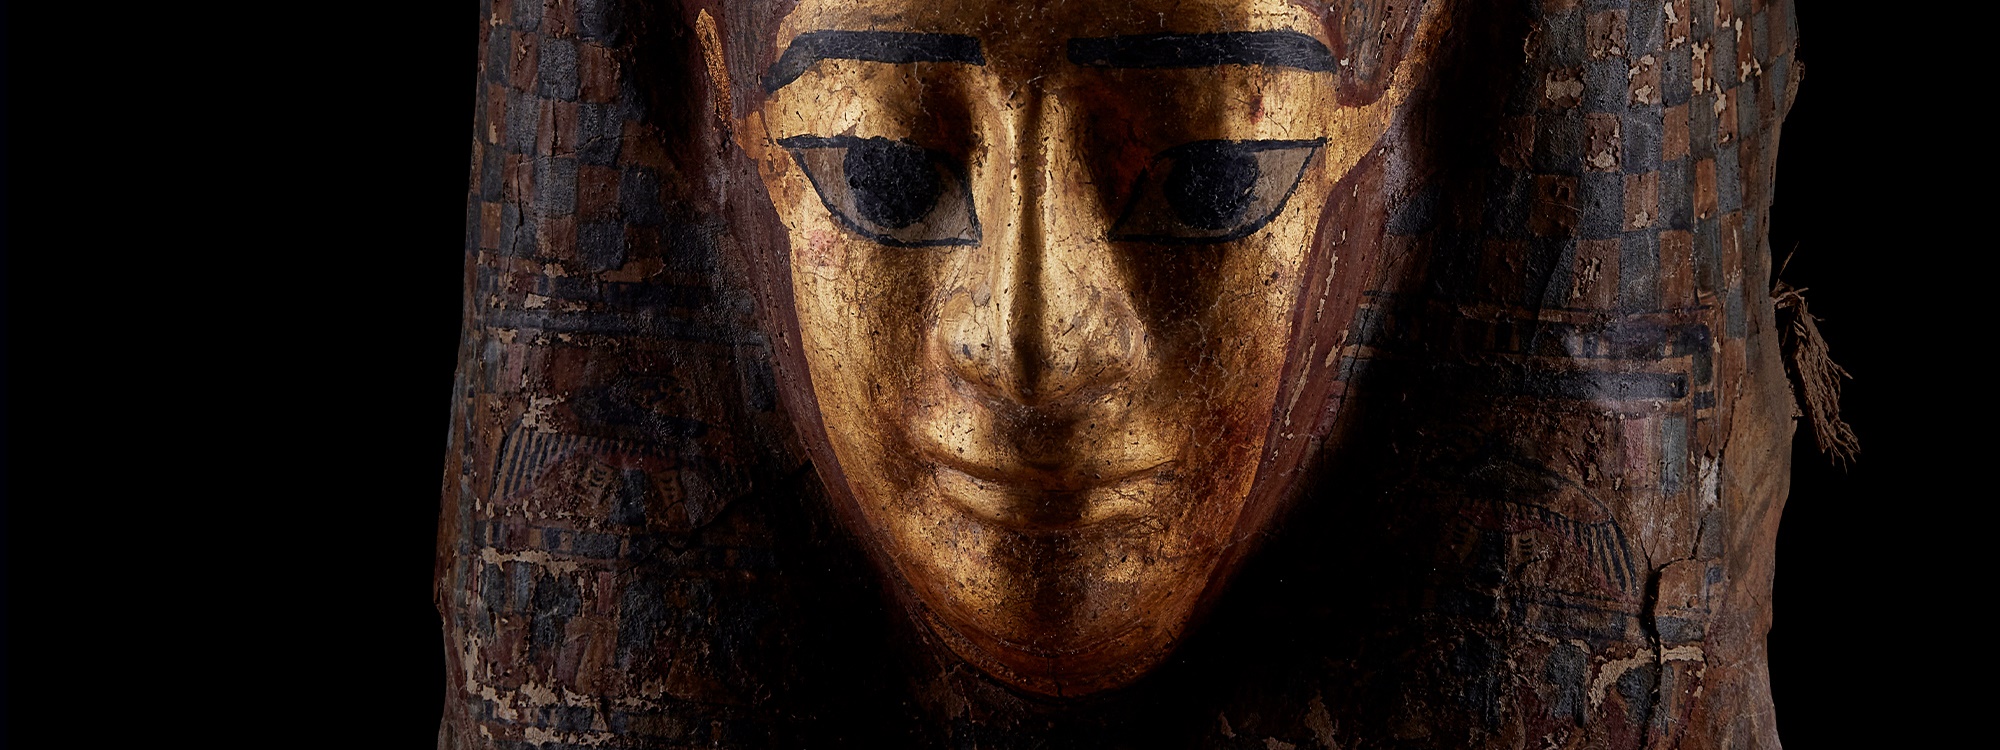 An Ancient Egyptian Cartonnage Mask